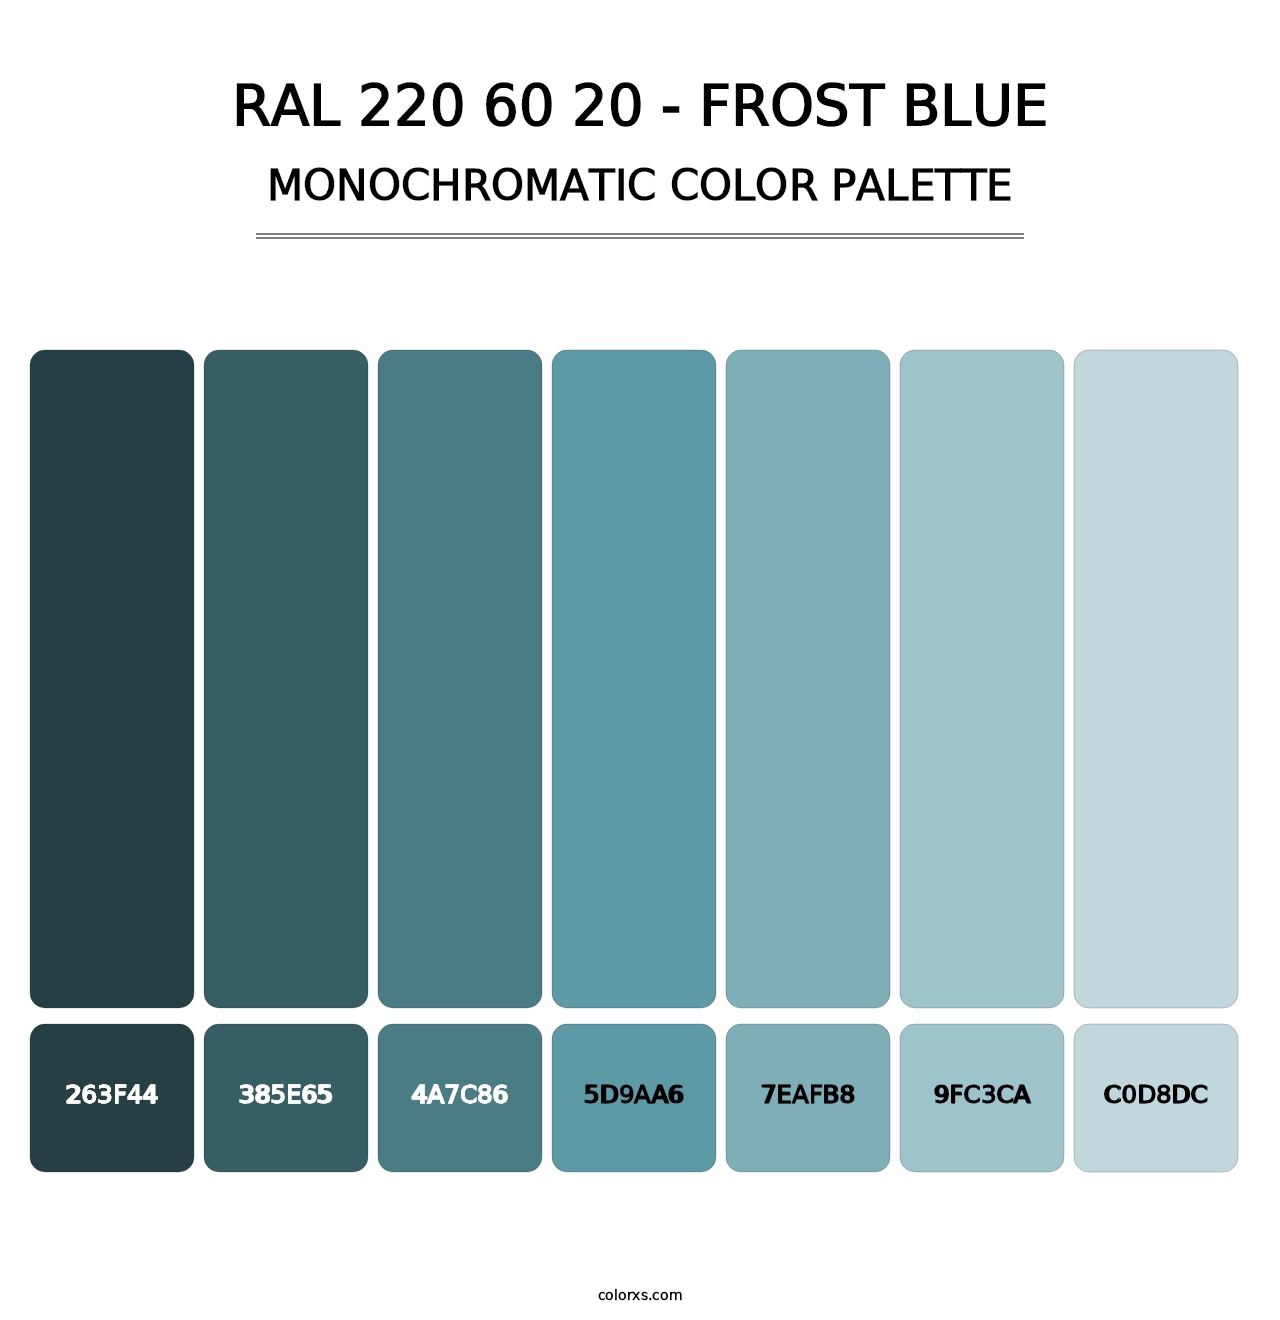 RAL 220 60 20 - Frost Blue - Monochromatic Color Palette